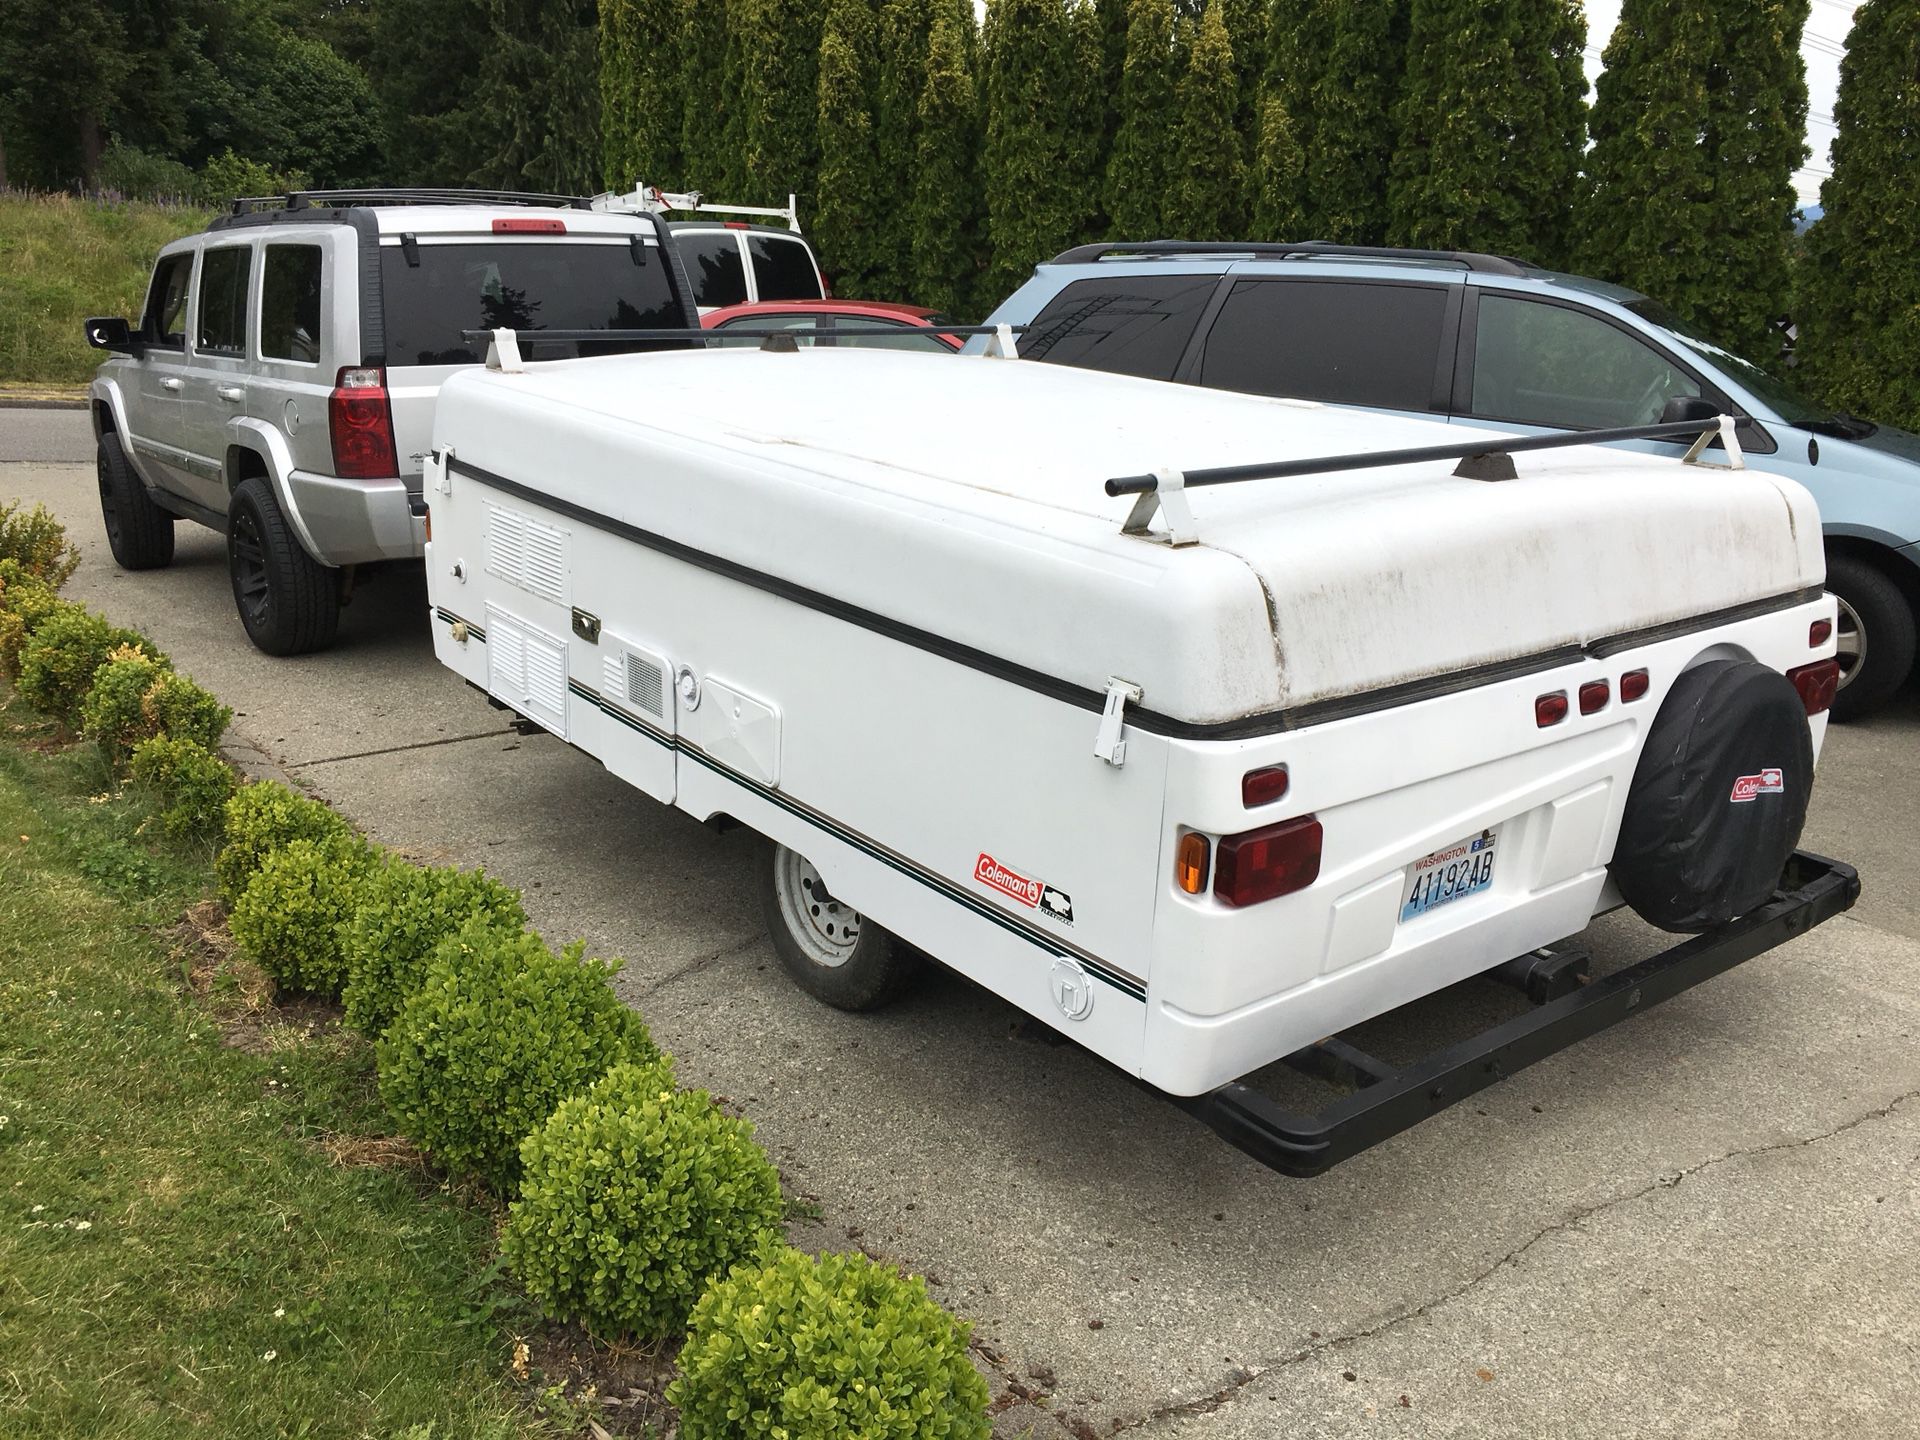 2000 Coleman Santa Fe Pop-Up trailer for Sale in Auburn, WA - OfferUp